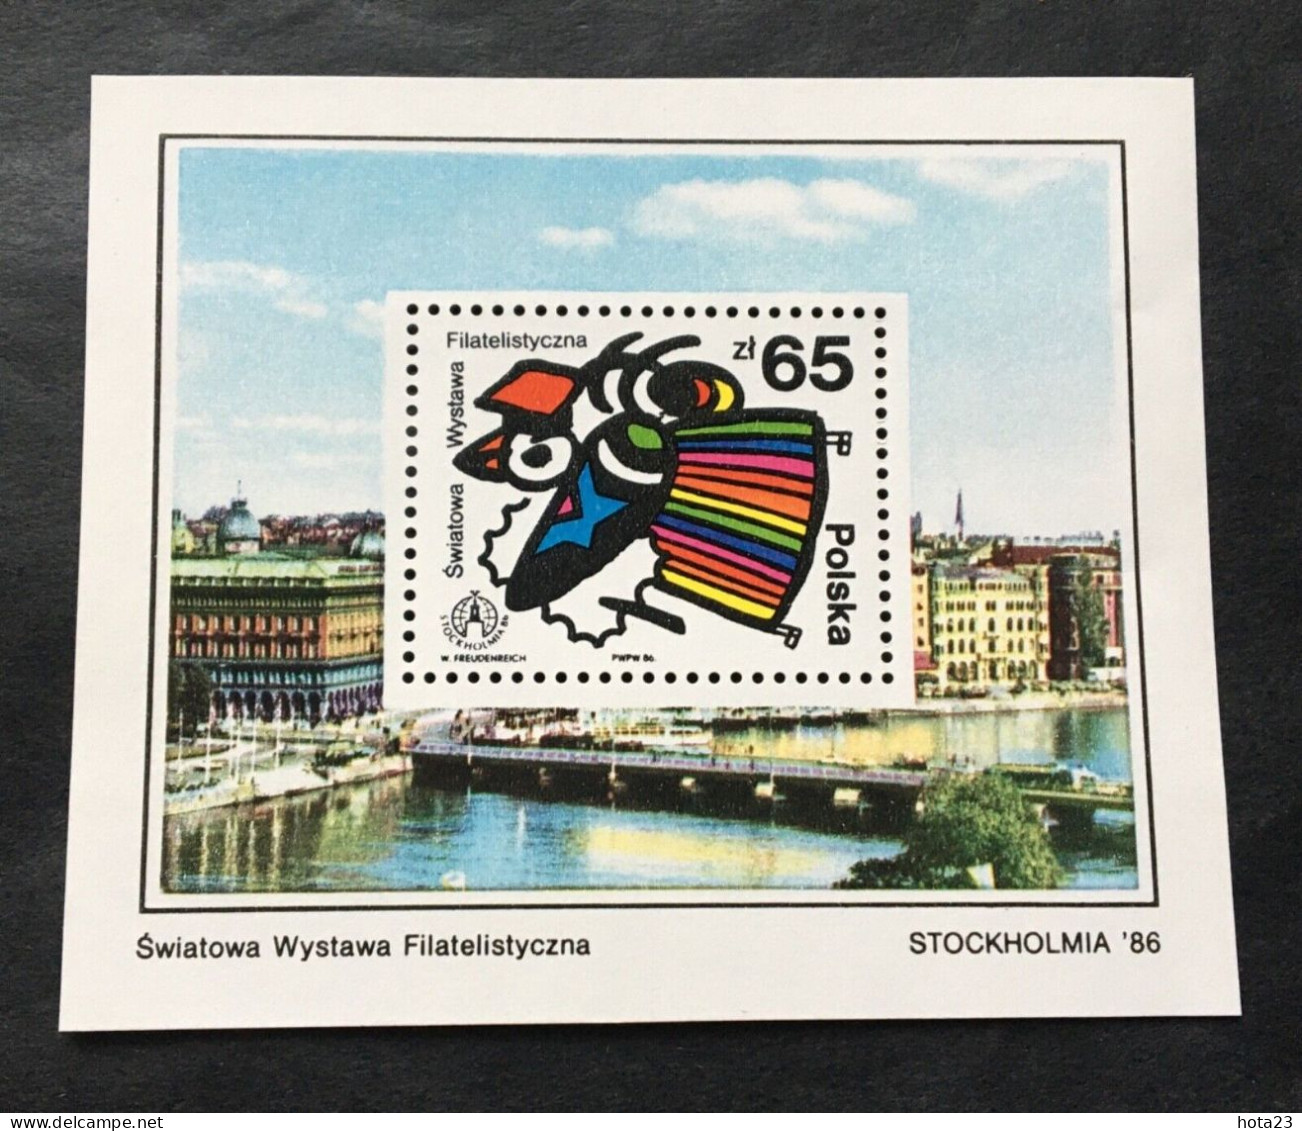 Poland 1986 Philatelic Exhibition In Swerige - Stockholm Block Michel No. 100 - MNH - Unused Stamps